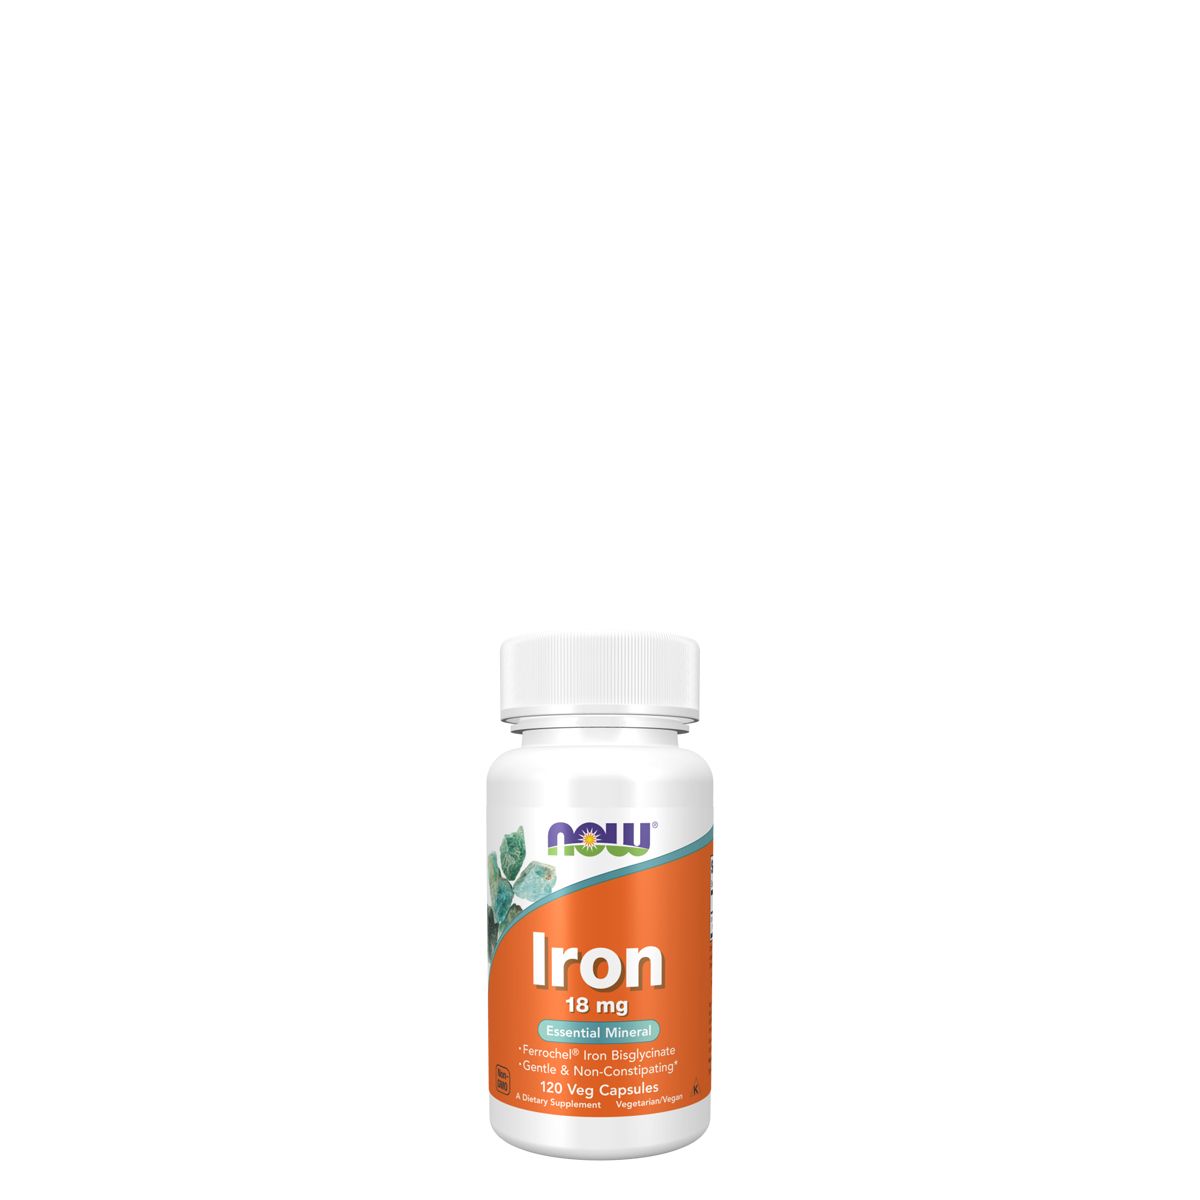 Vas-biszglicinát 18 mg, Now Iron from Ferrochel Iron Bisglycinate, 120 kapszula